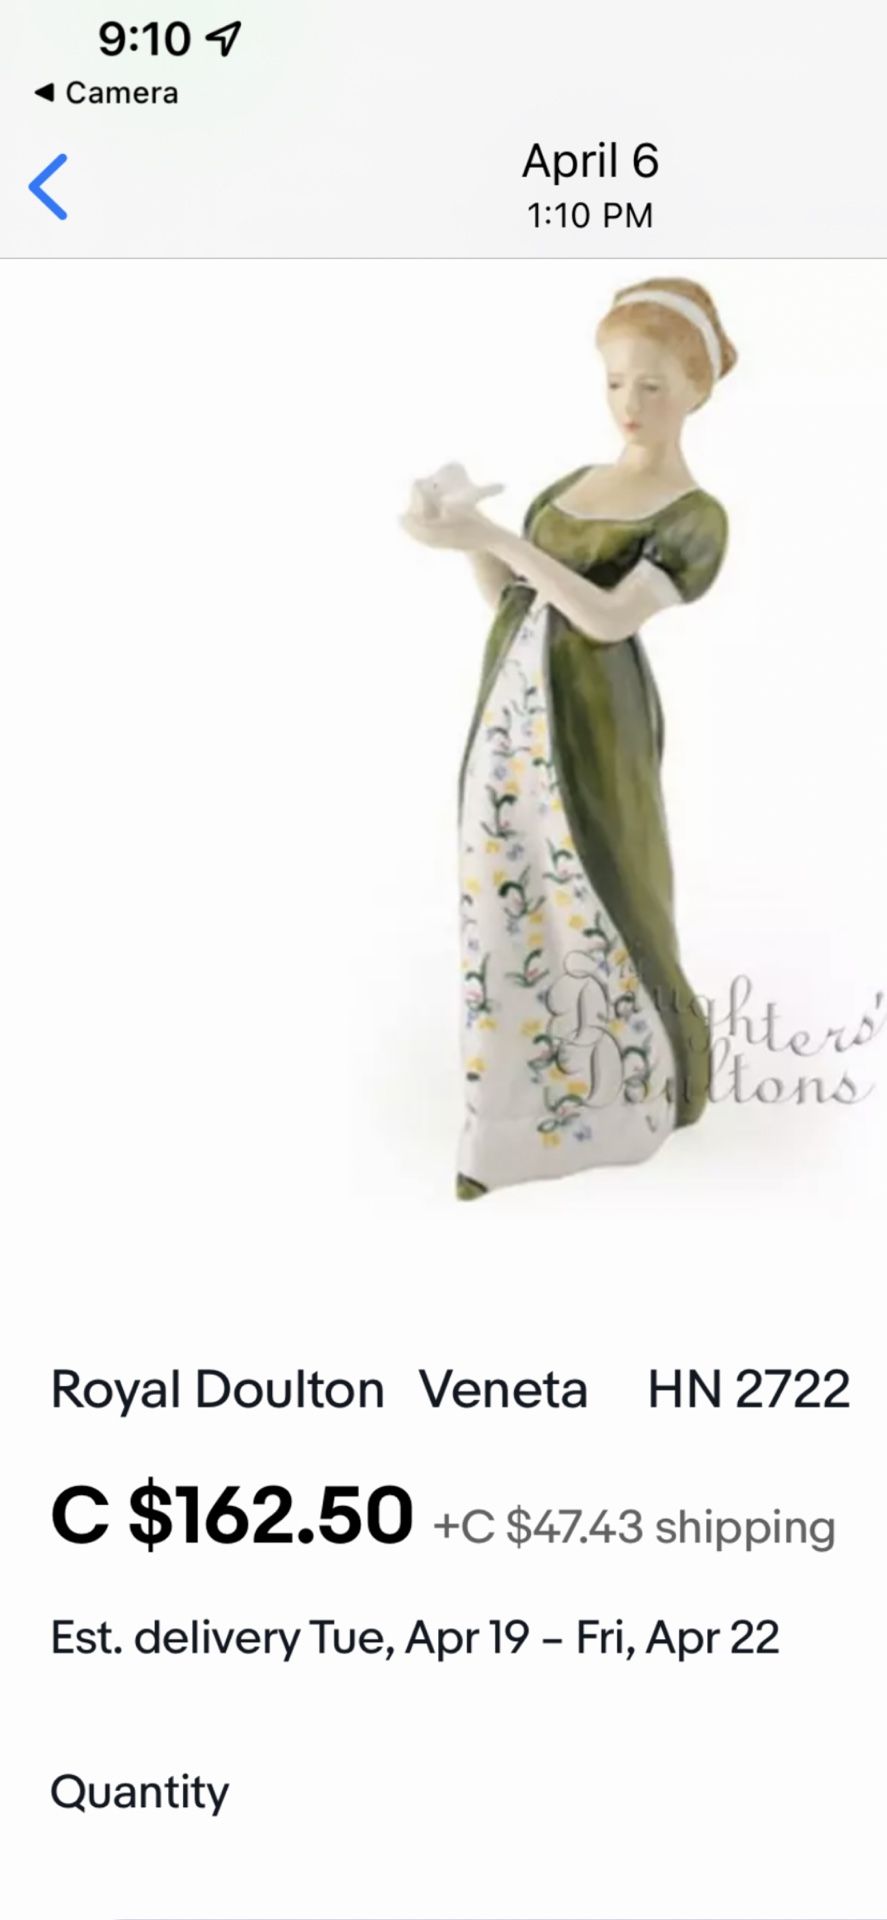 Royal Doulton Veneta